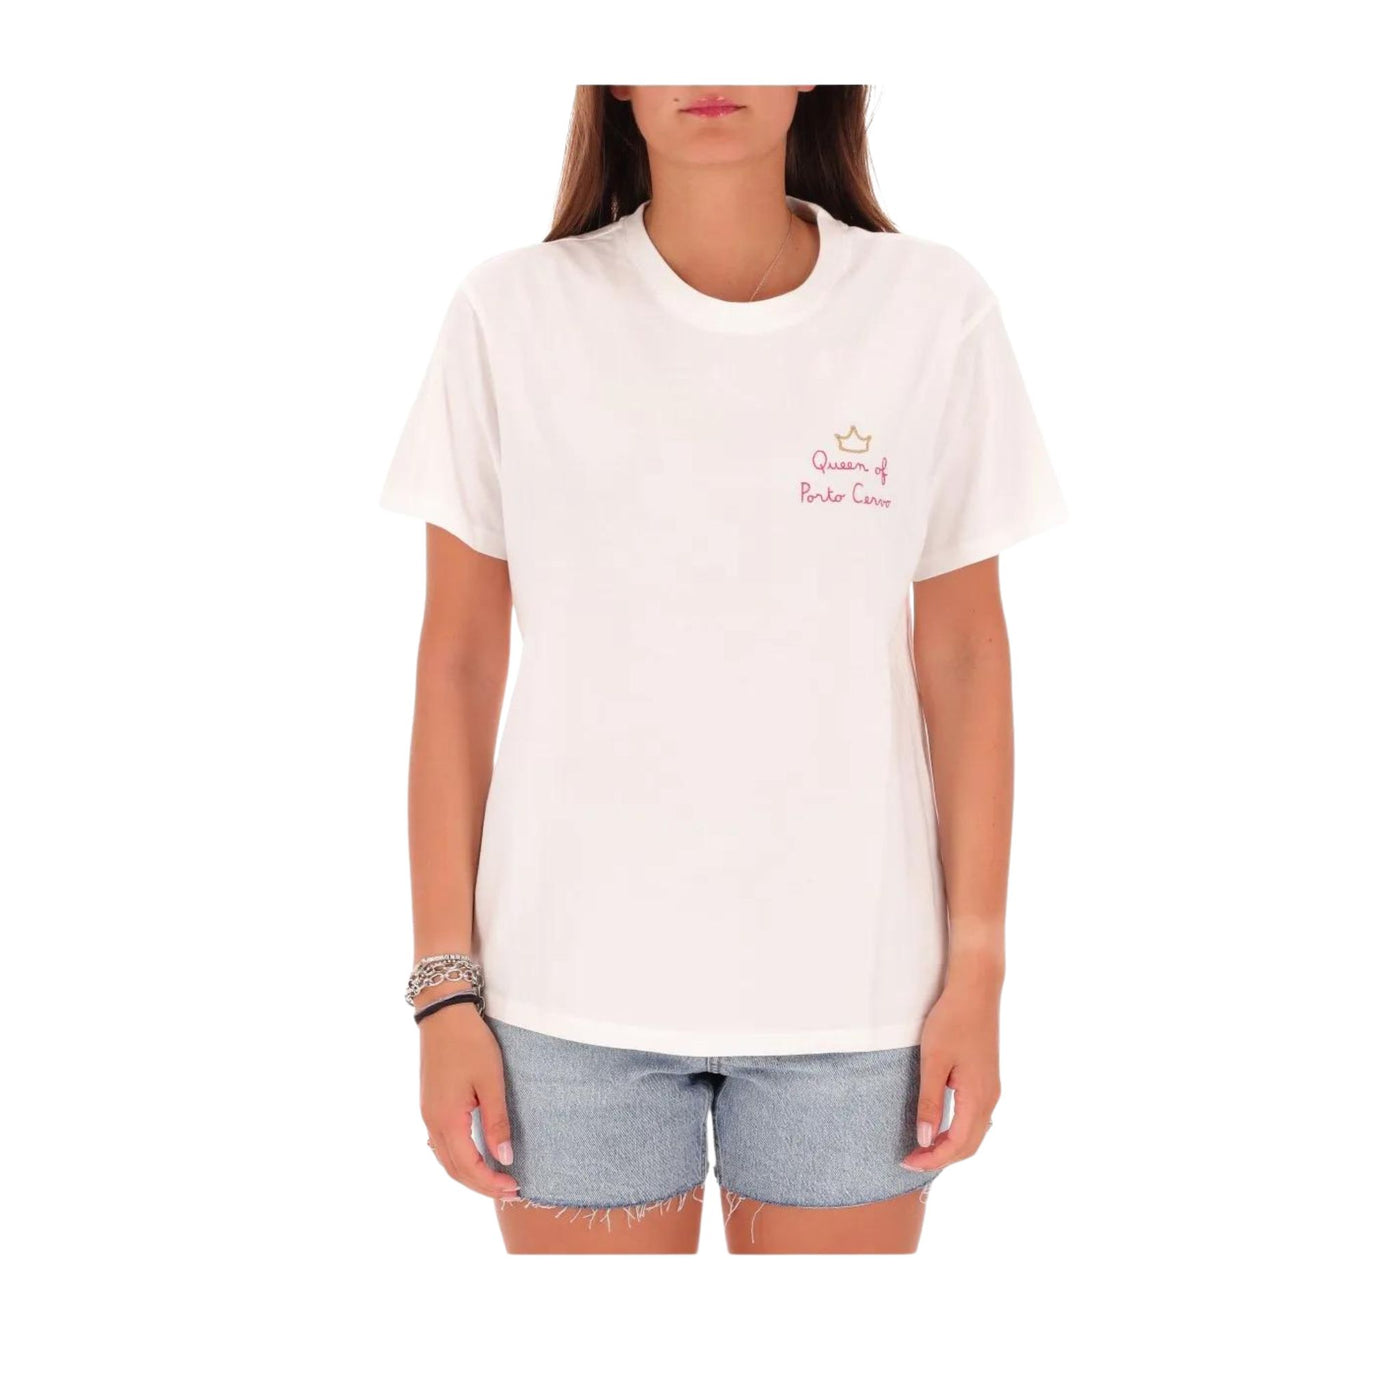 T-shirt bianca "Queen of Porto Cervo"